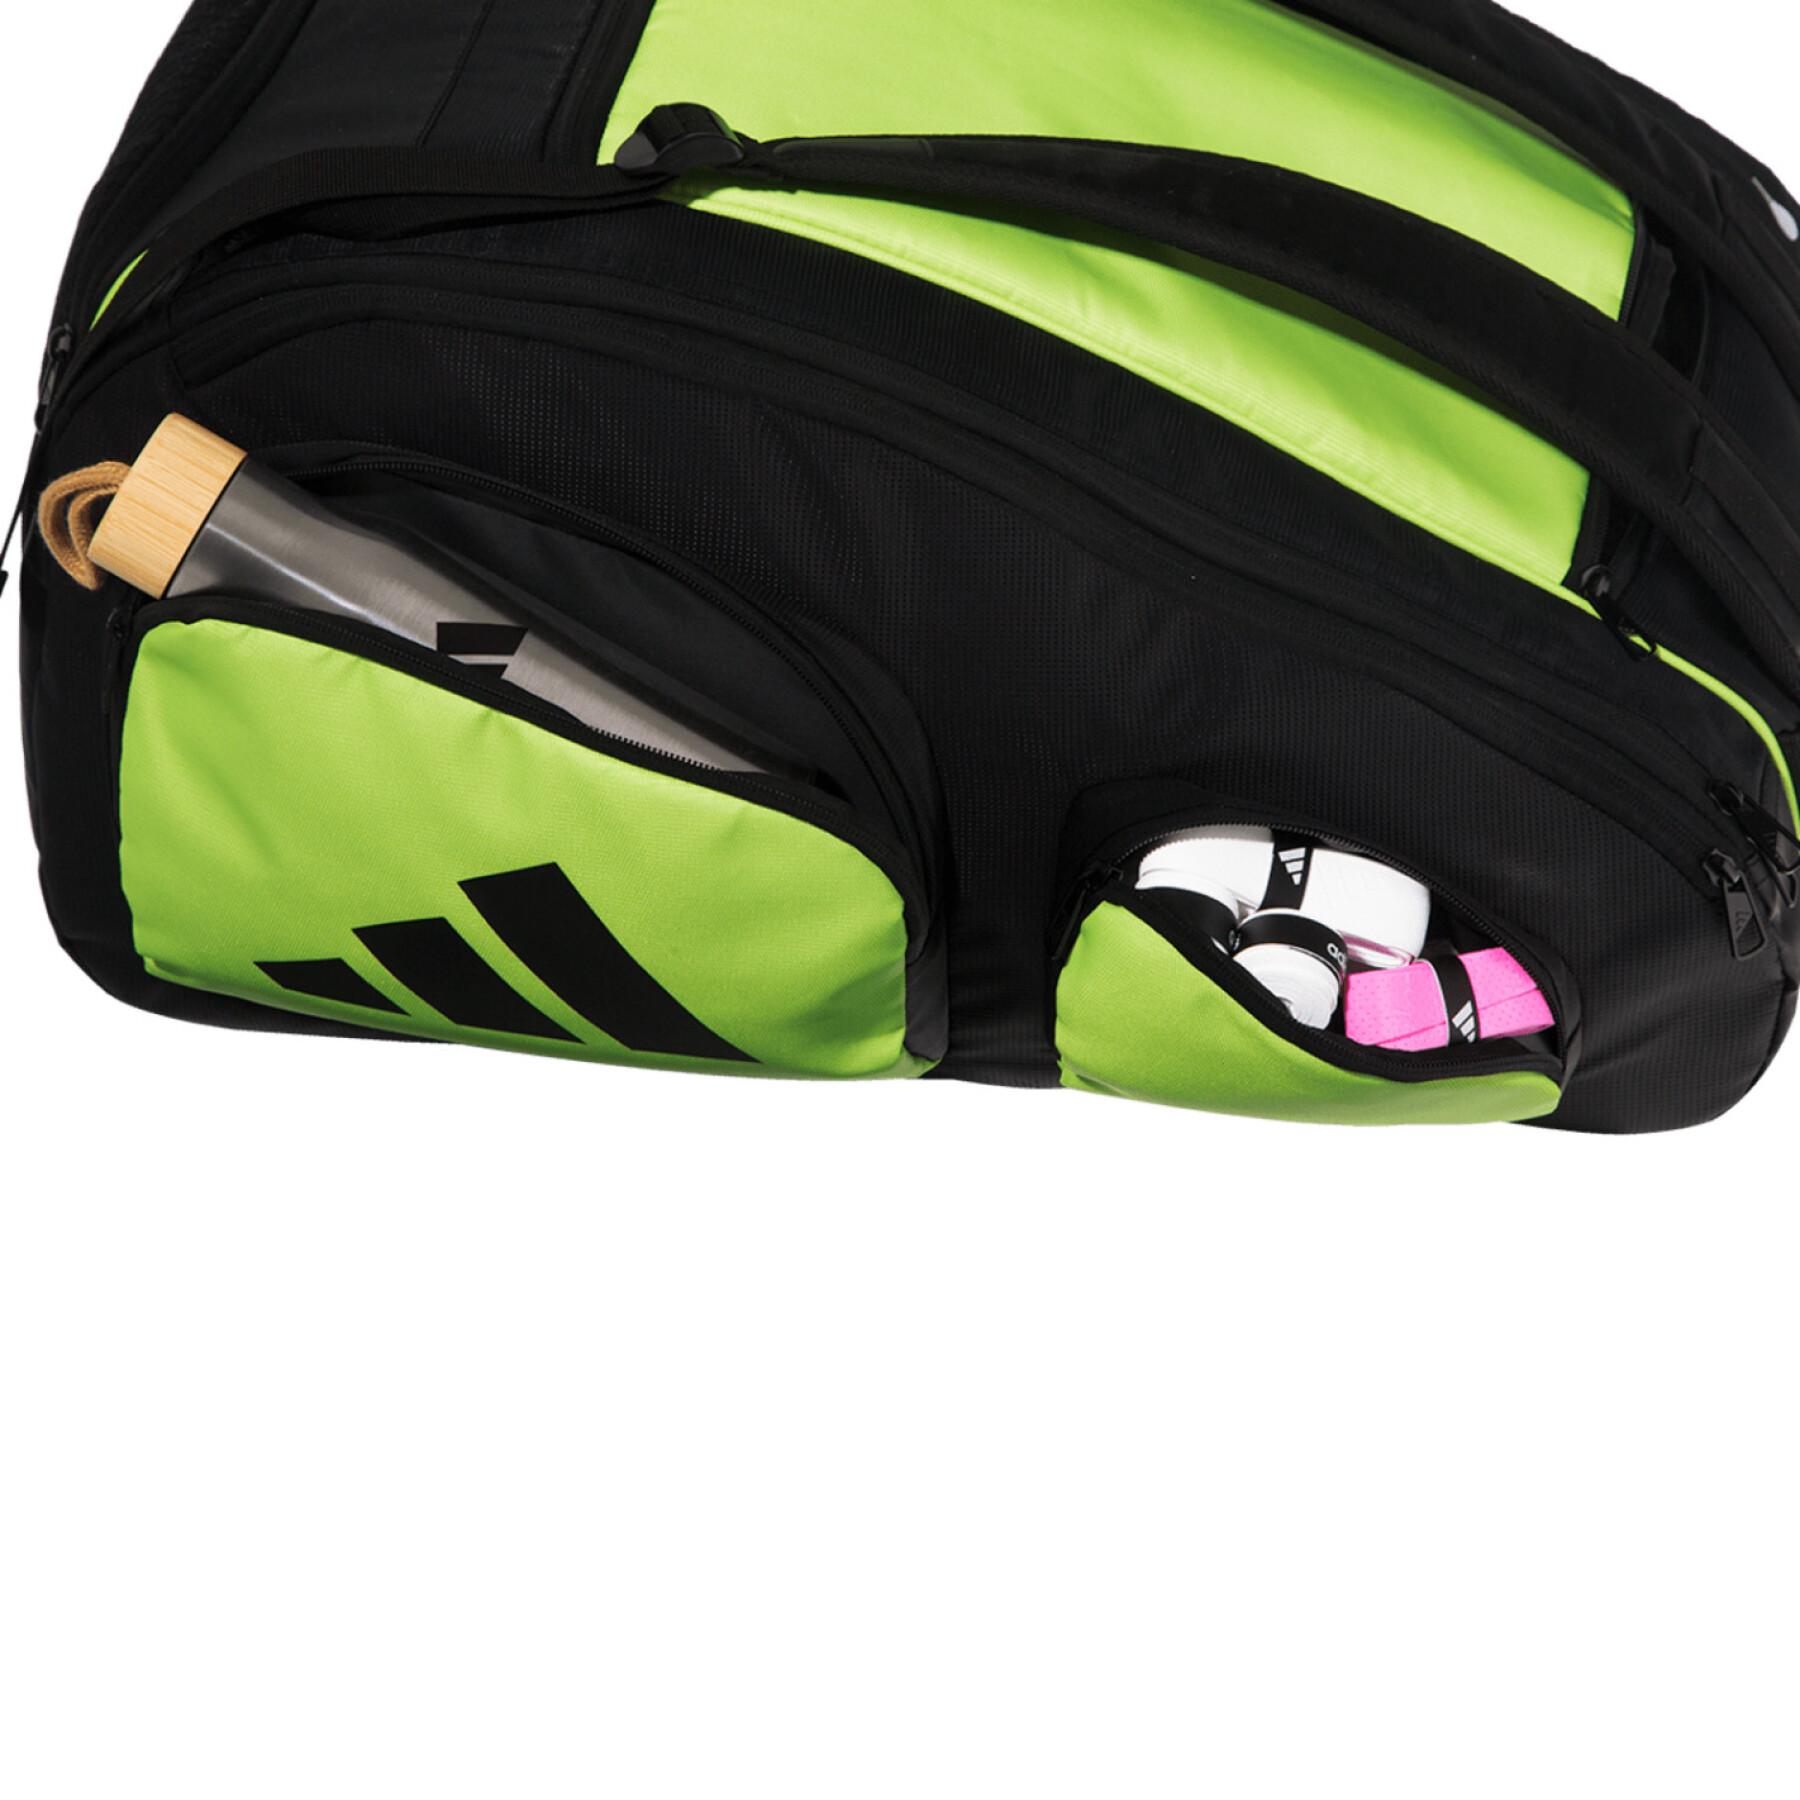 Racket bag from padel adidas Protour 3.2